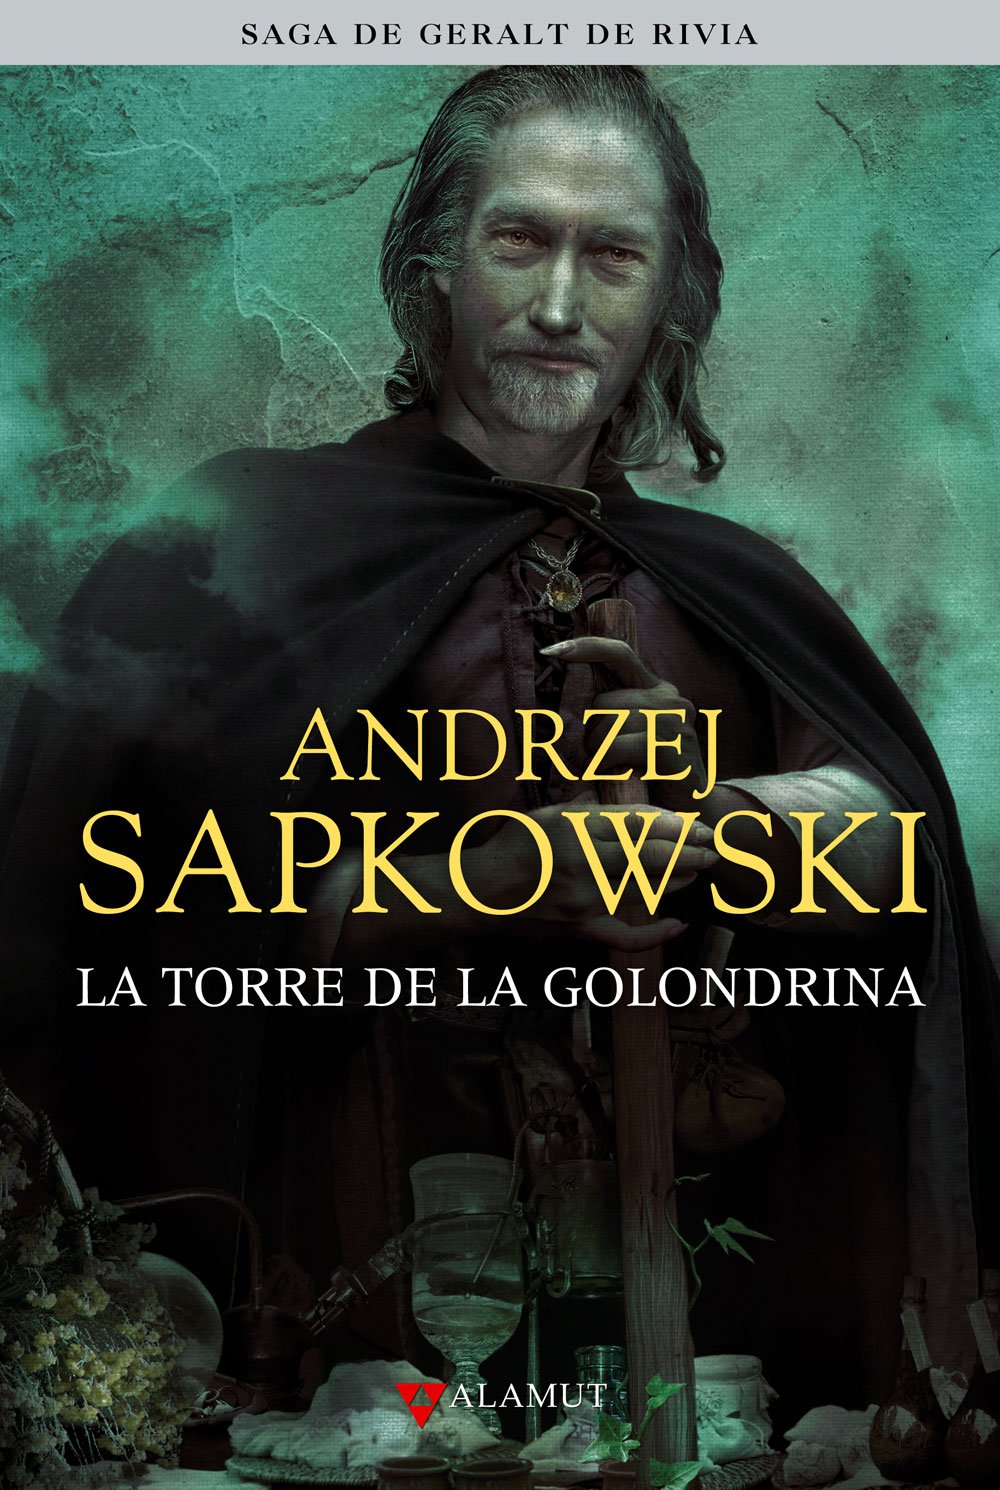 Libro de audio Saga de Geralt de Rivia: La Torre de la Golondrina [6] – Andrzej Sapkowski